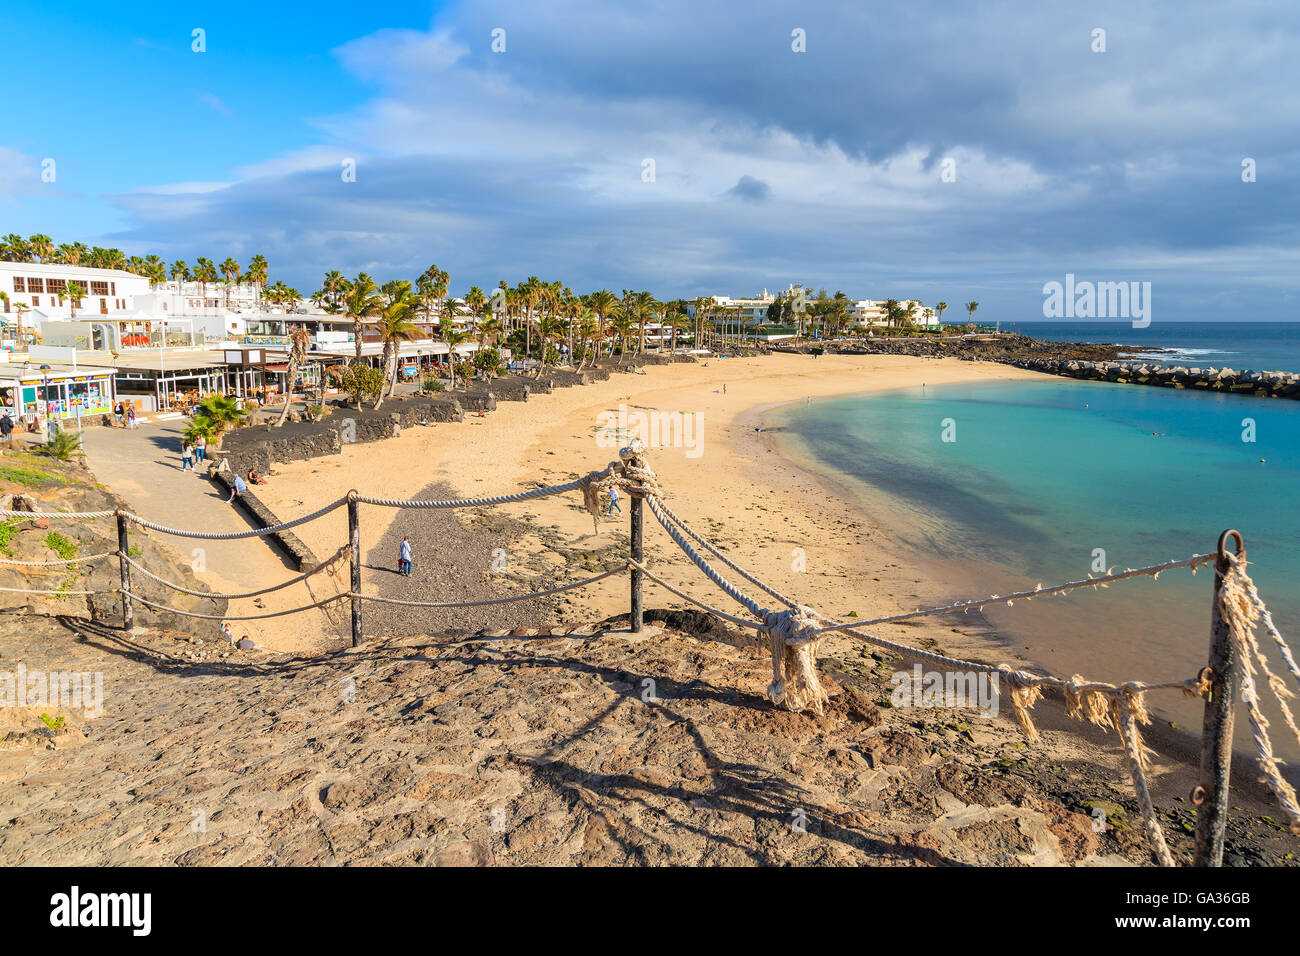 View of Flamingo beach in Playa Blanca on coast of Lanzarote island, Spain Stock Photo